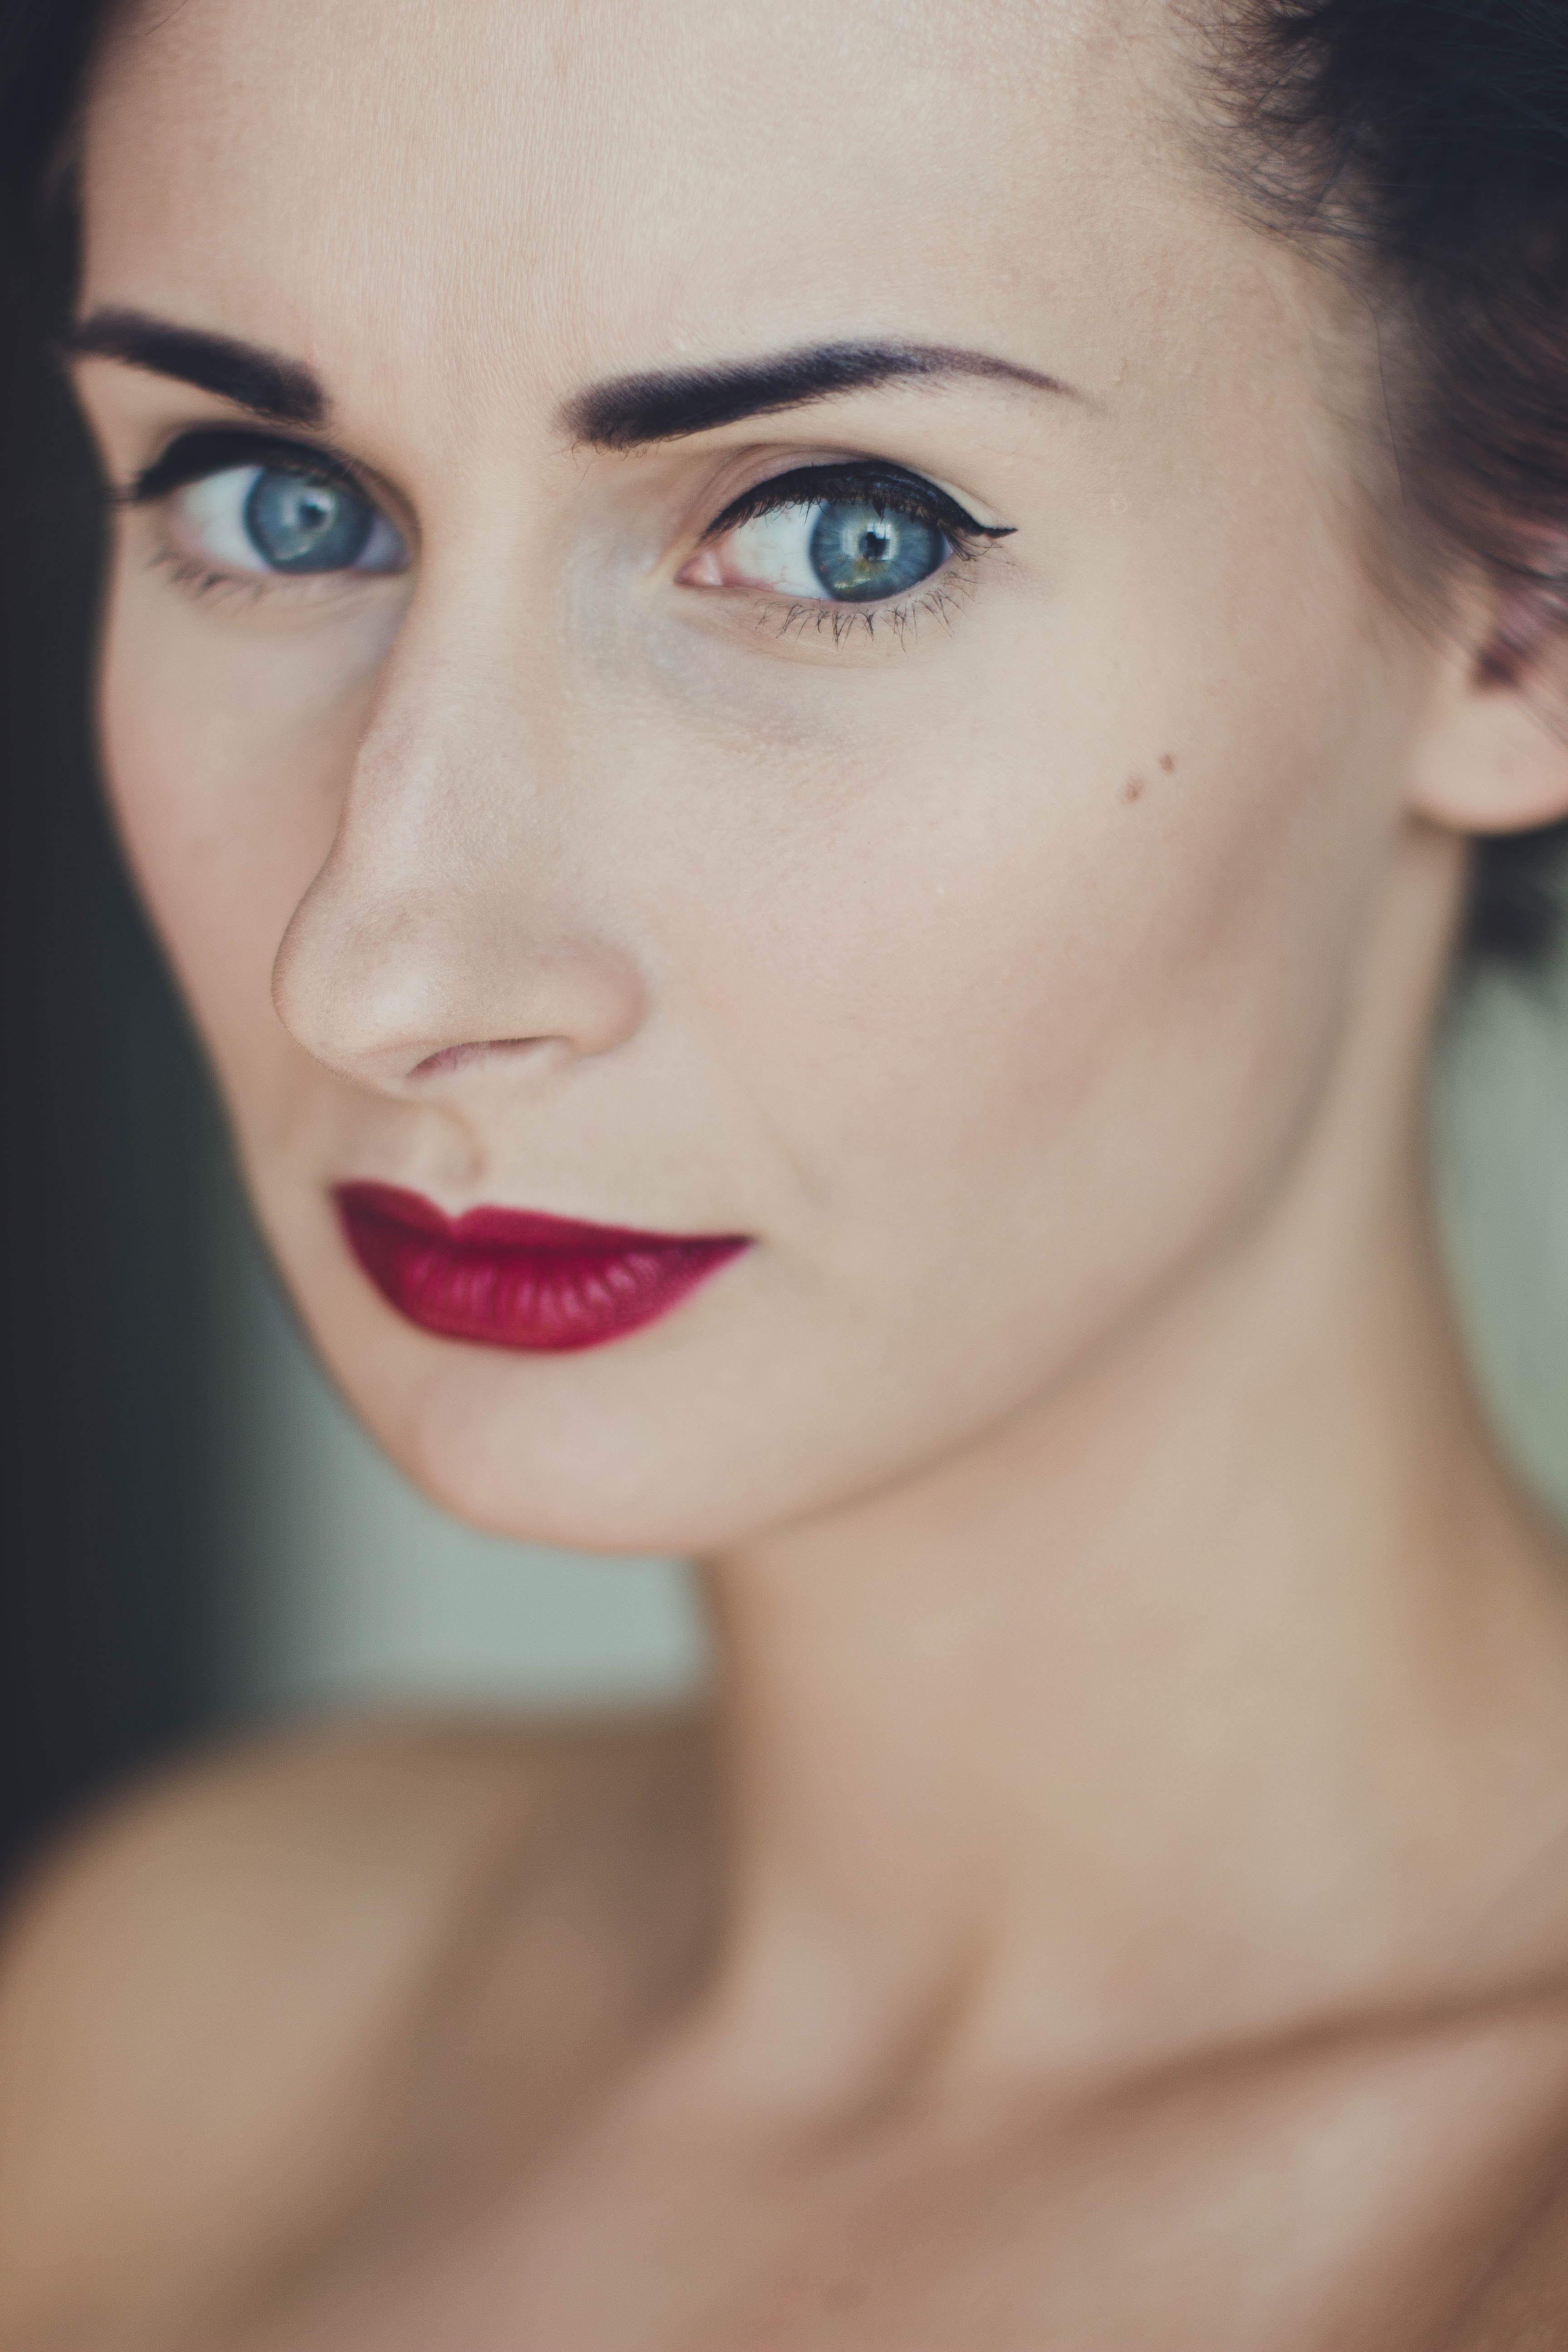 Woman wearing black mascara and red lipstick photo